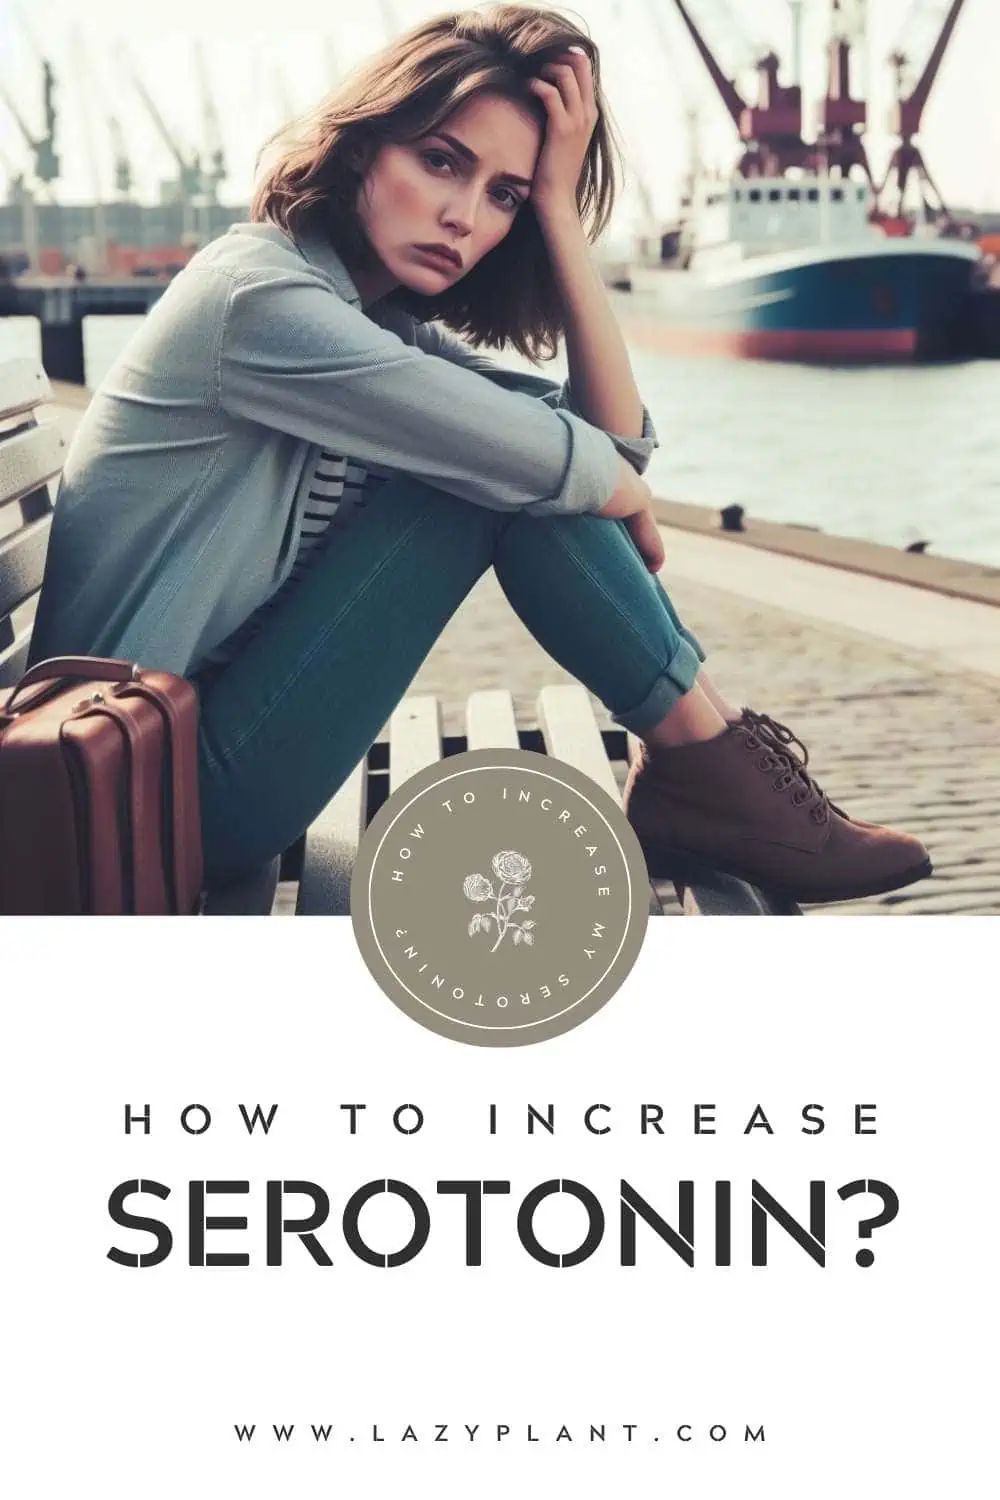 Increase serotonin through food naturally.